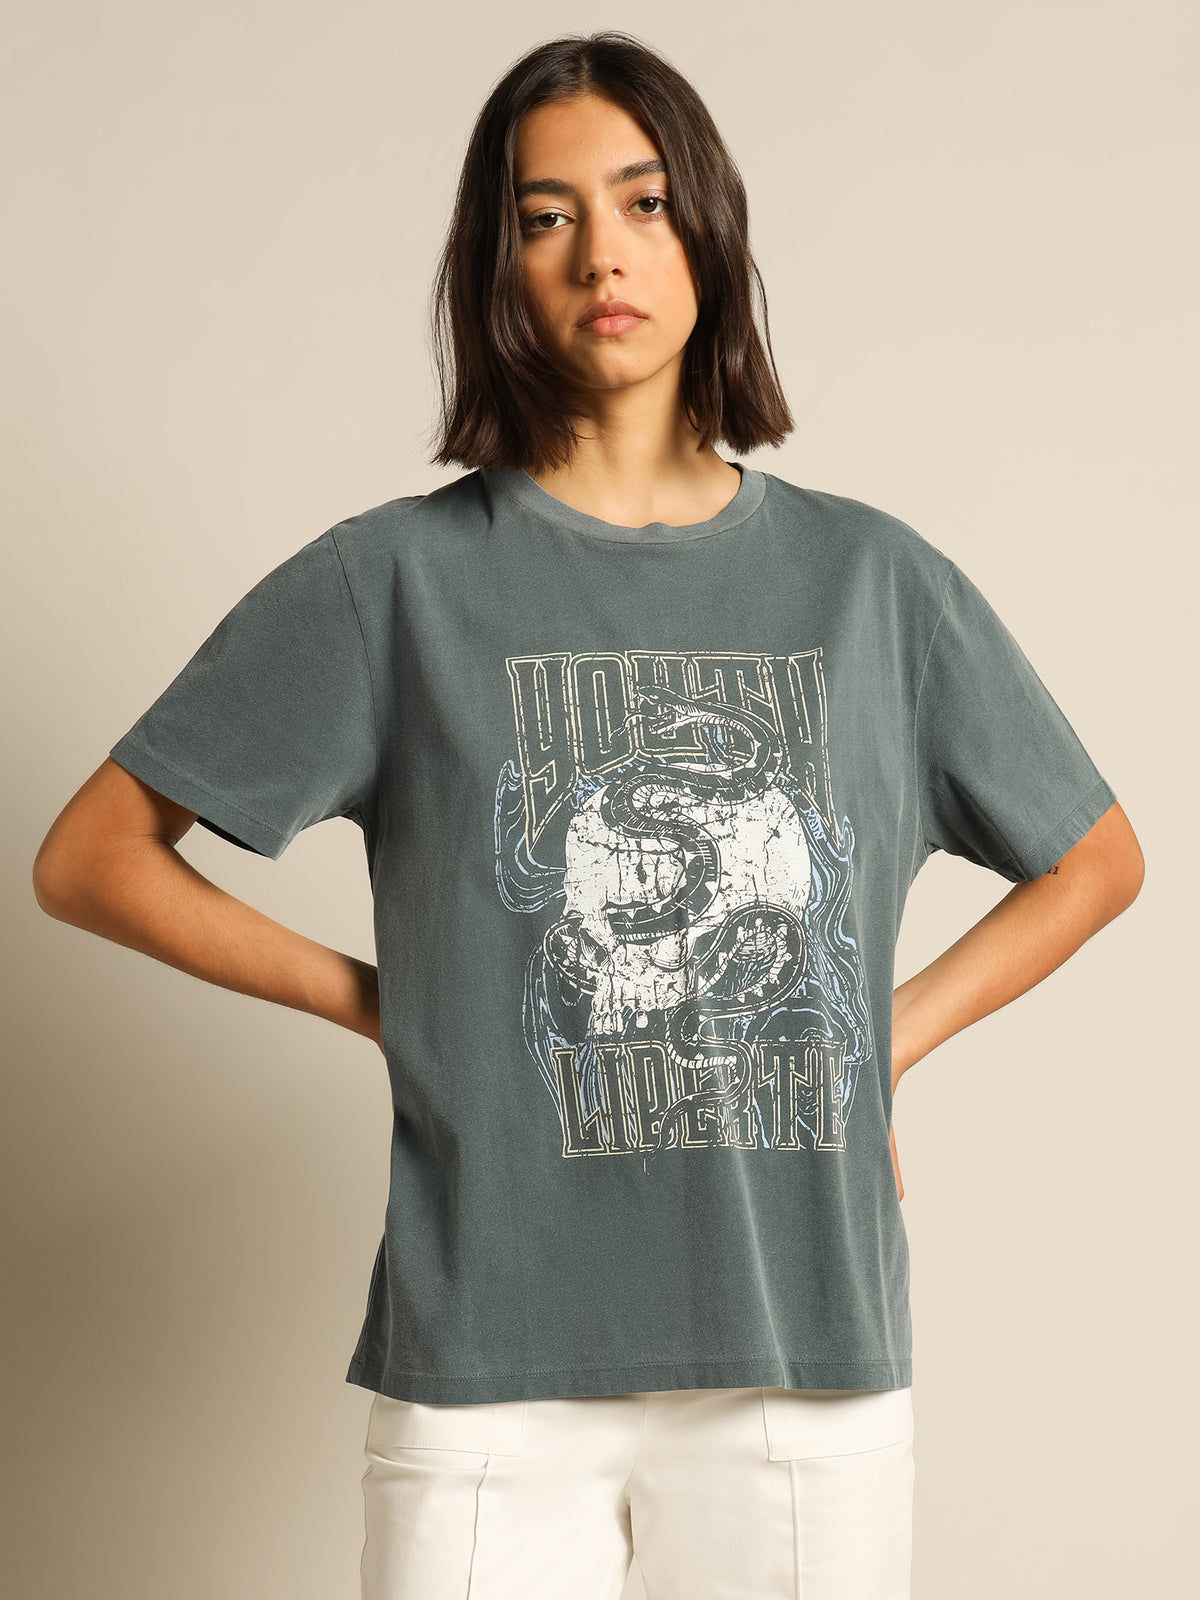 Liberty T-Shirt in Deep Sea